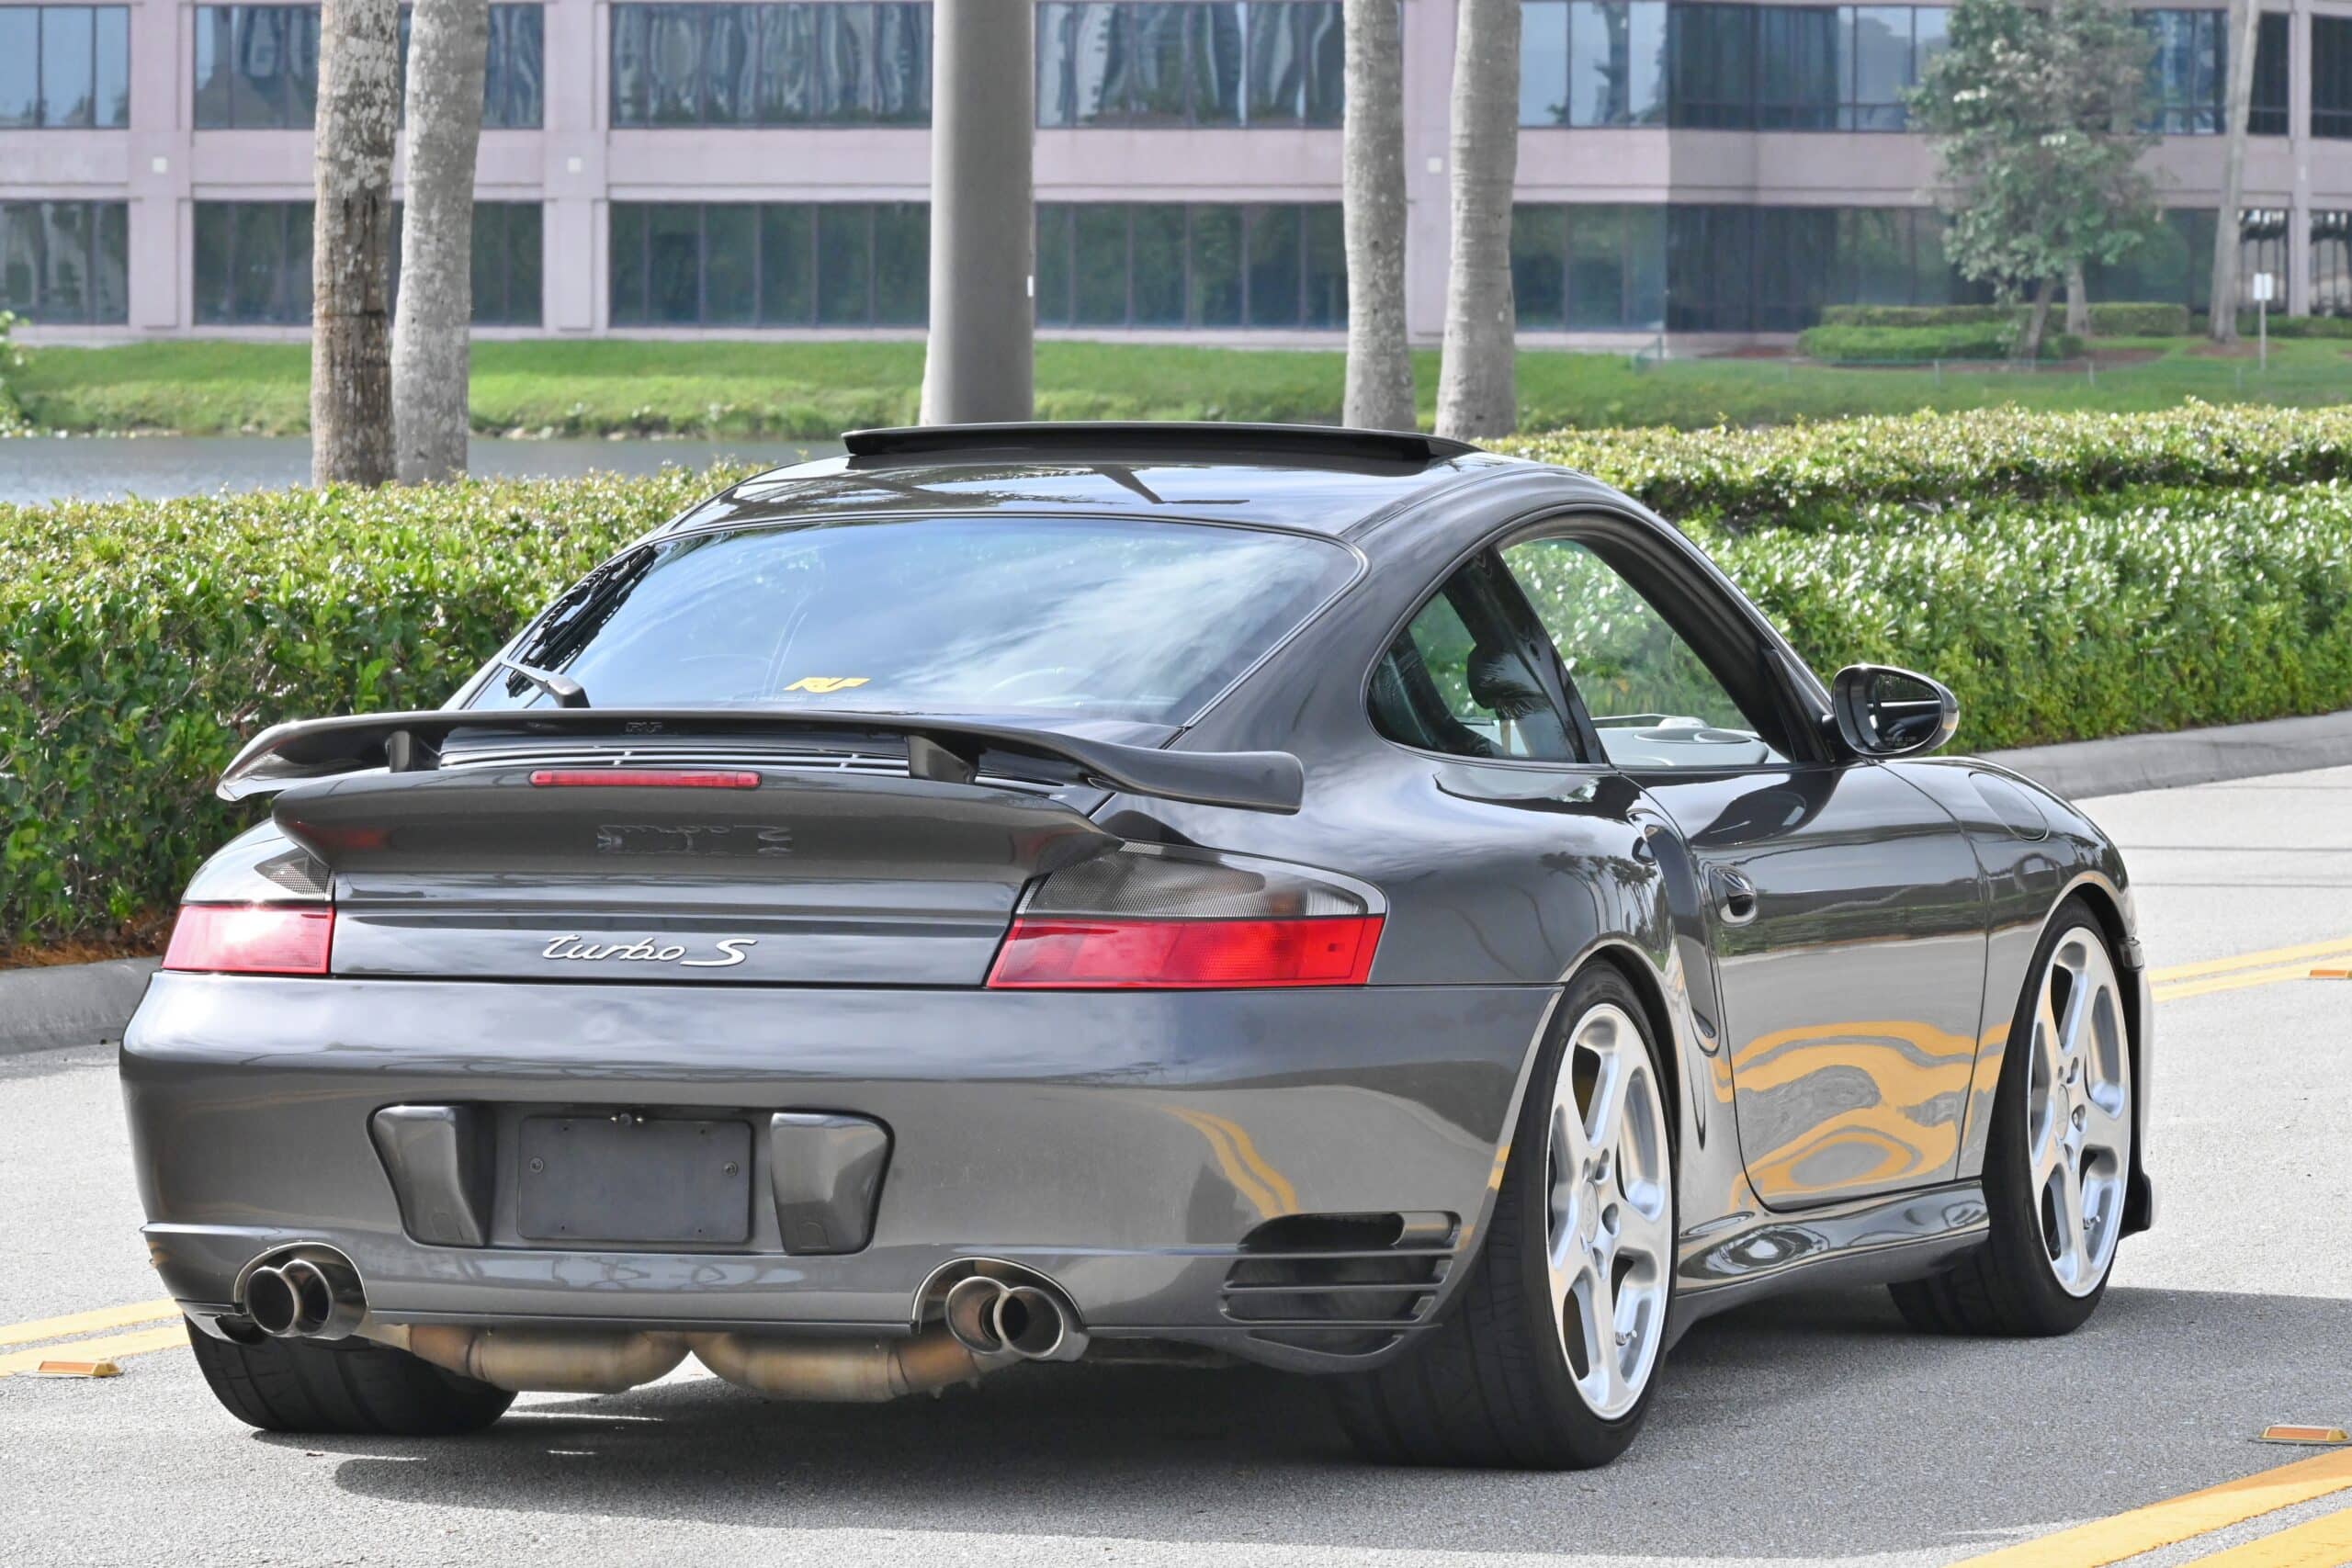 2005 Porsche 911 Turbo S 996 Original Paint-Carbon Ceramic Brakes-Sport Seats- RUF Upgrades- RARE TURBO S